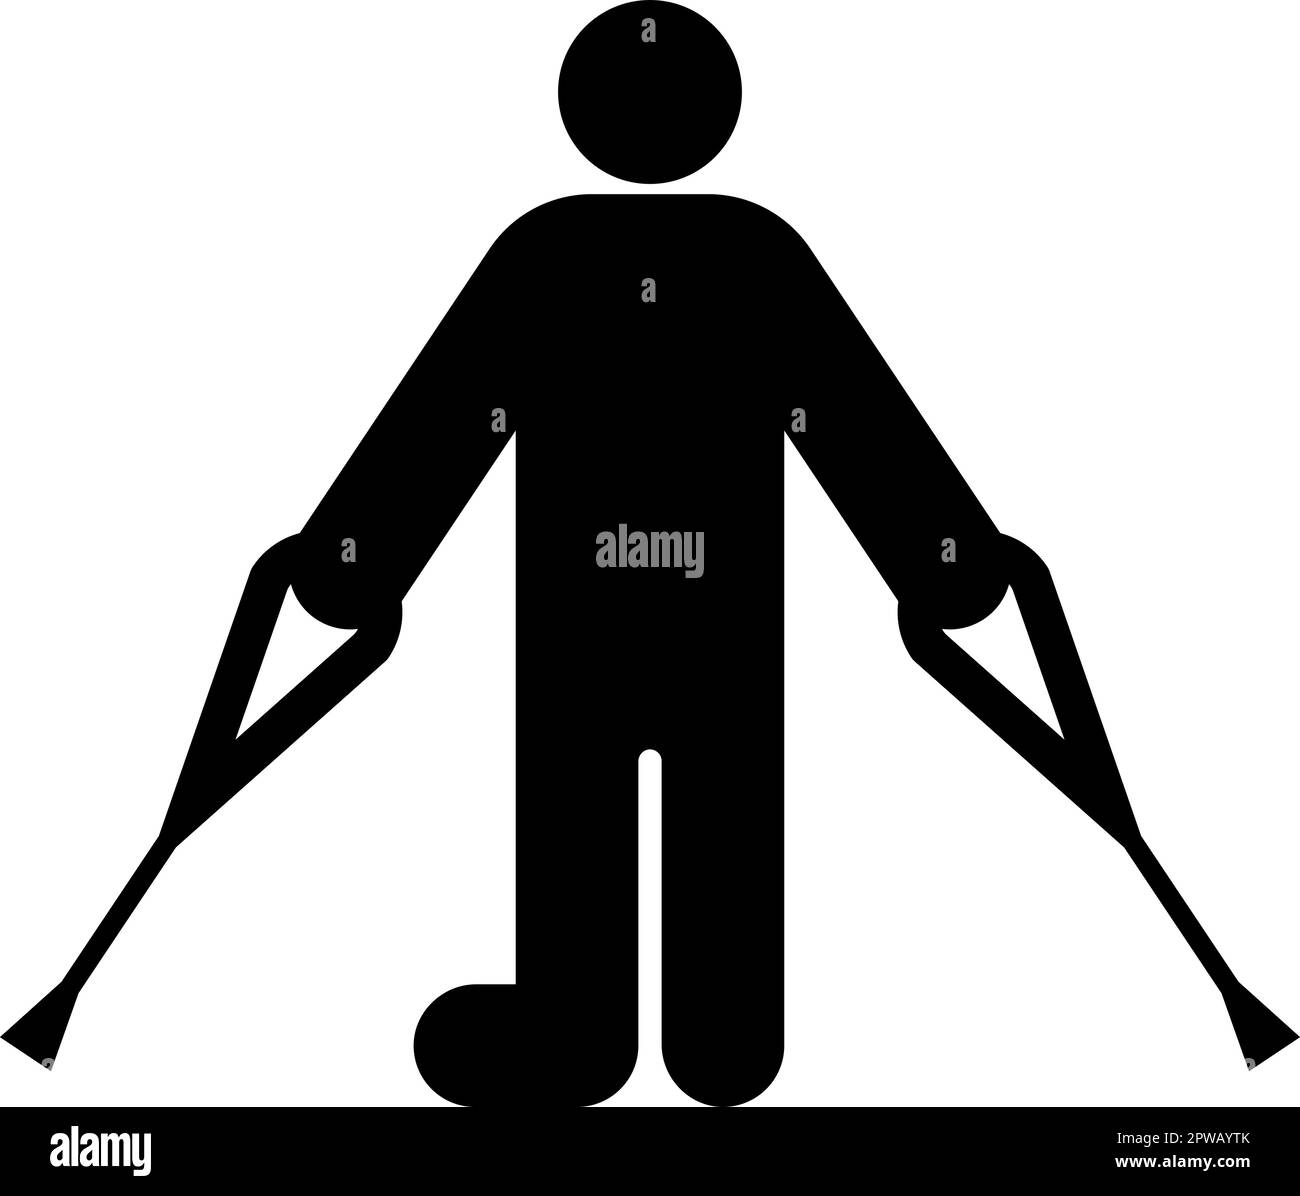 Man with broken leg crutch cane gypsum foot stick using sticks person crutches trauma concept icon black color vector illustration image flat style Stock Vector